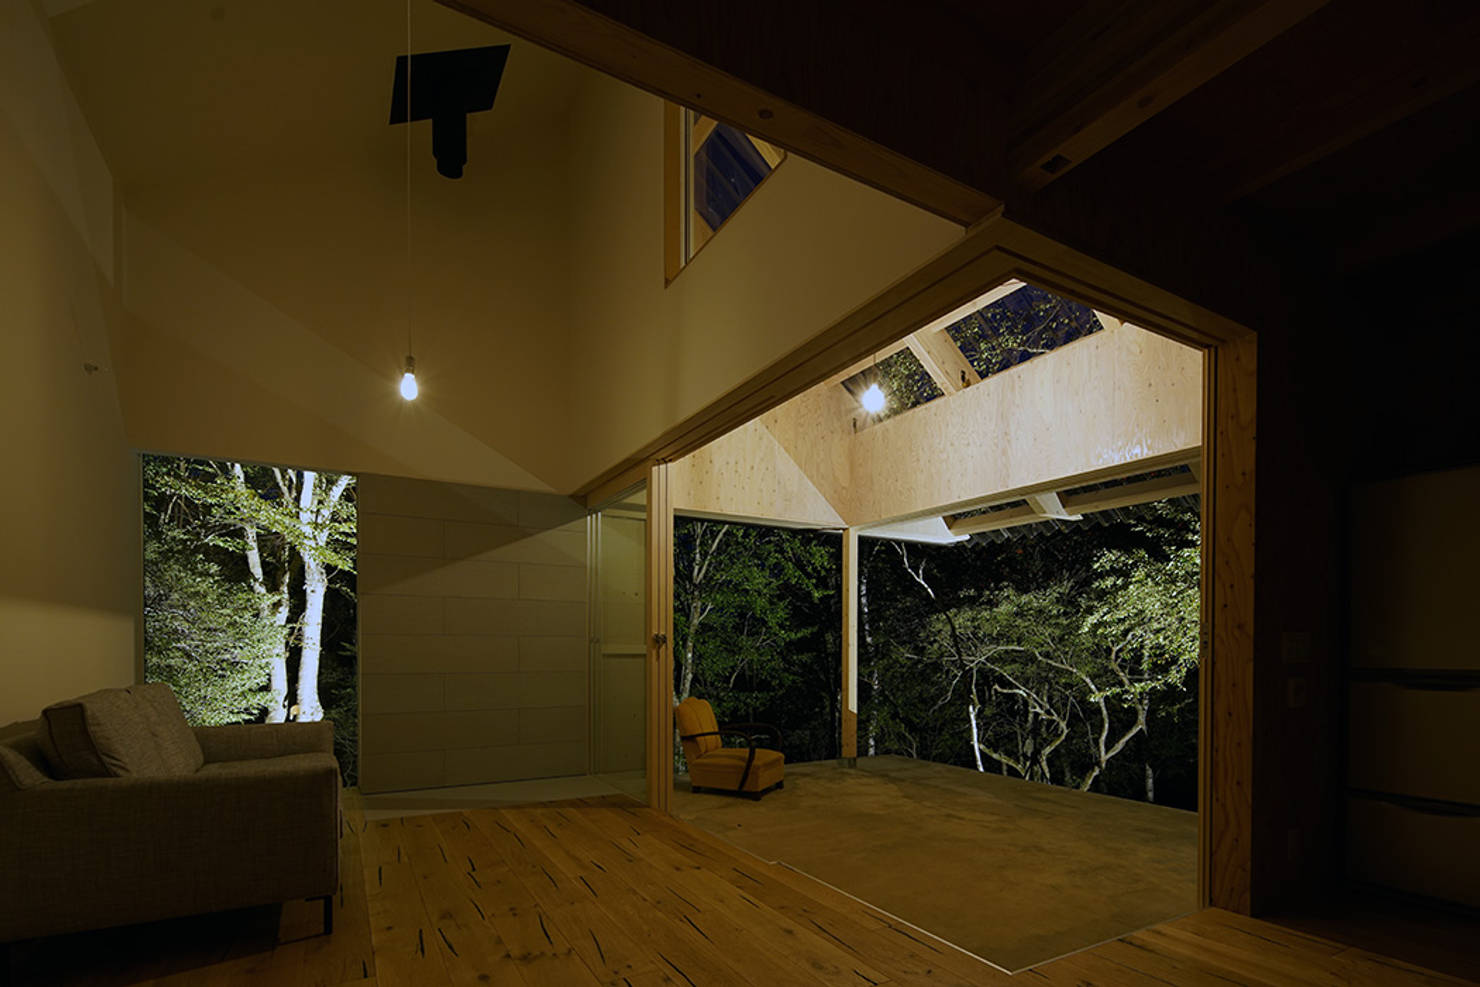 Японский проект недорогого каркасного дома- фотографии
				